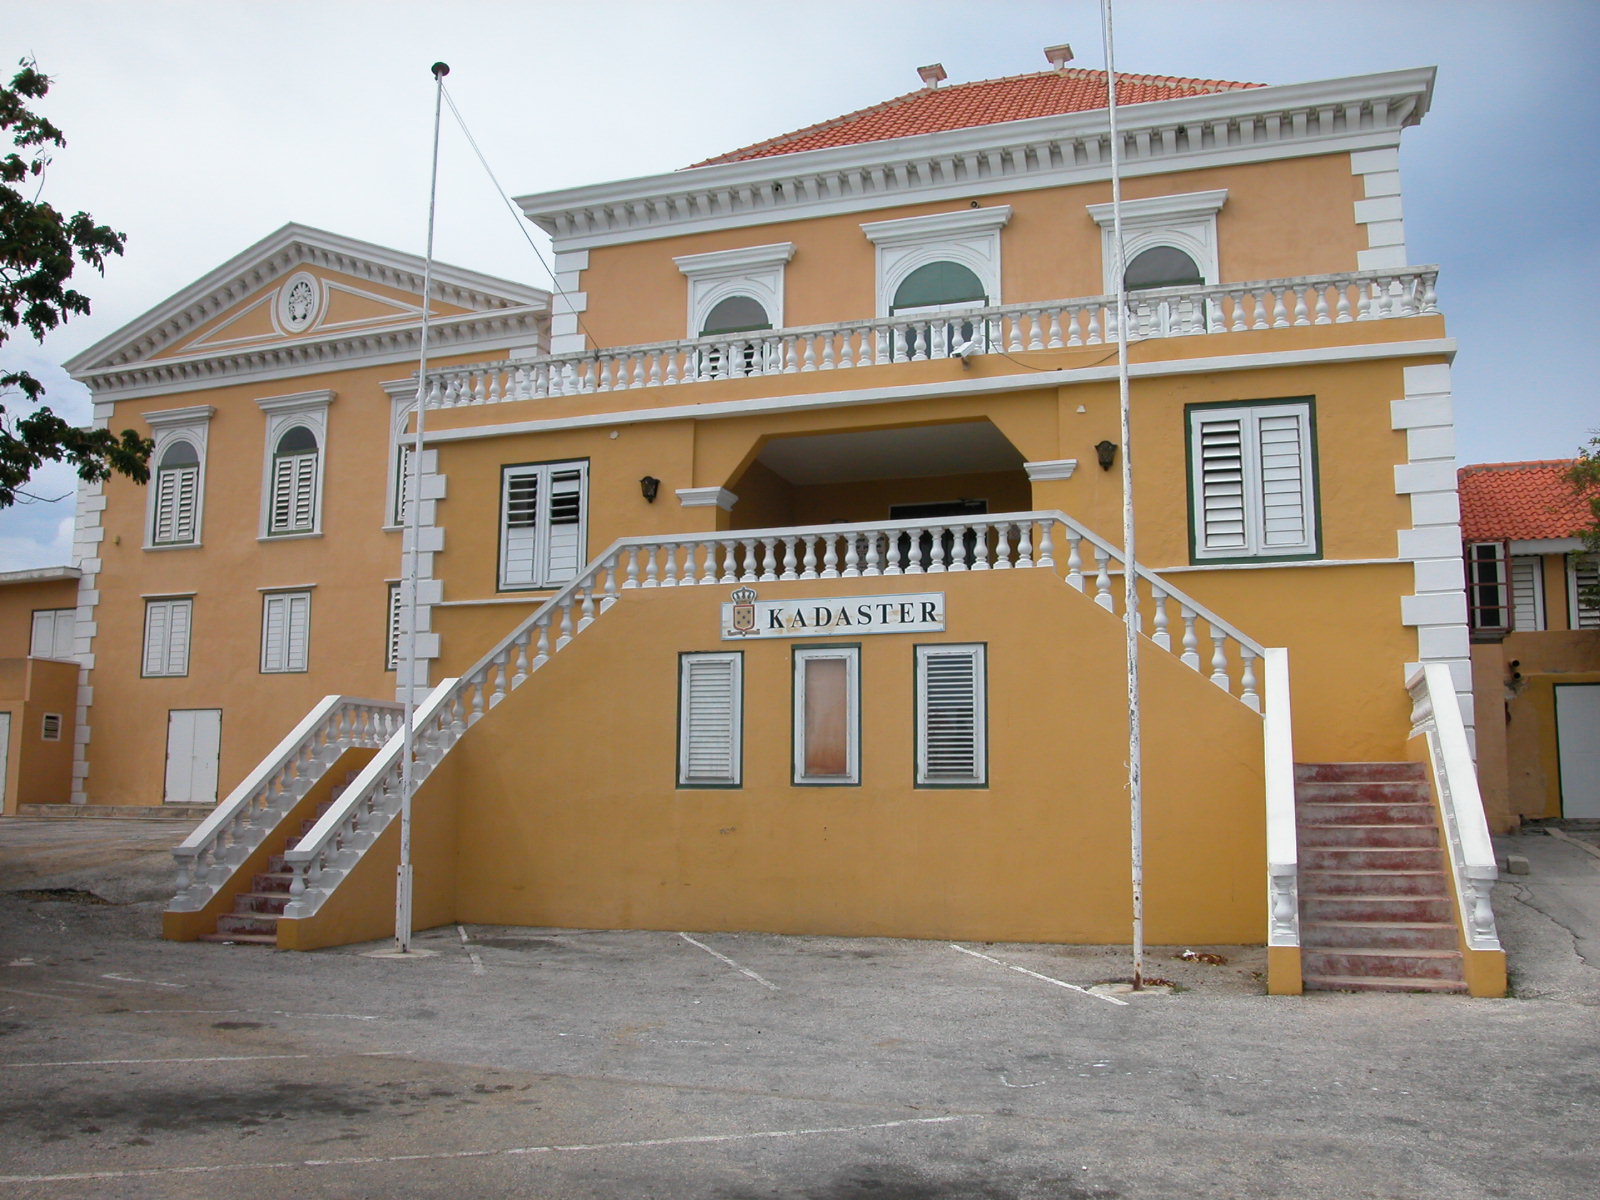 jacco kadaster townhall yellow painted house villa flagpoles balcony